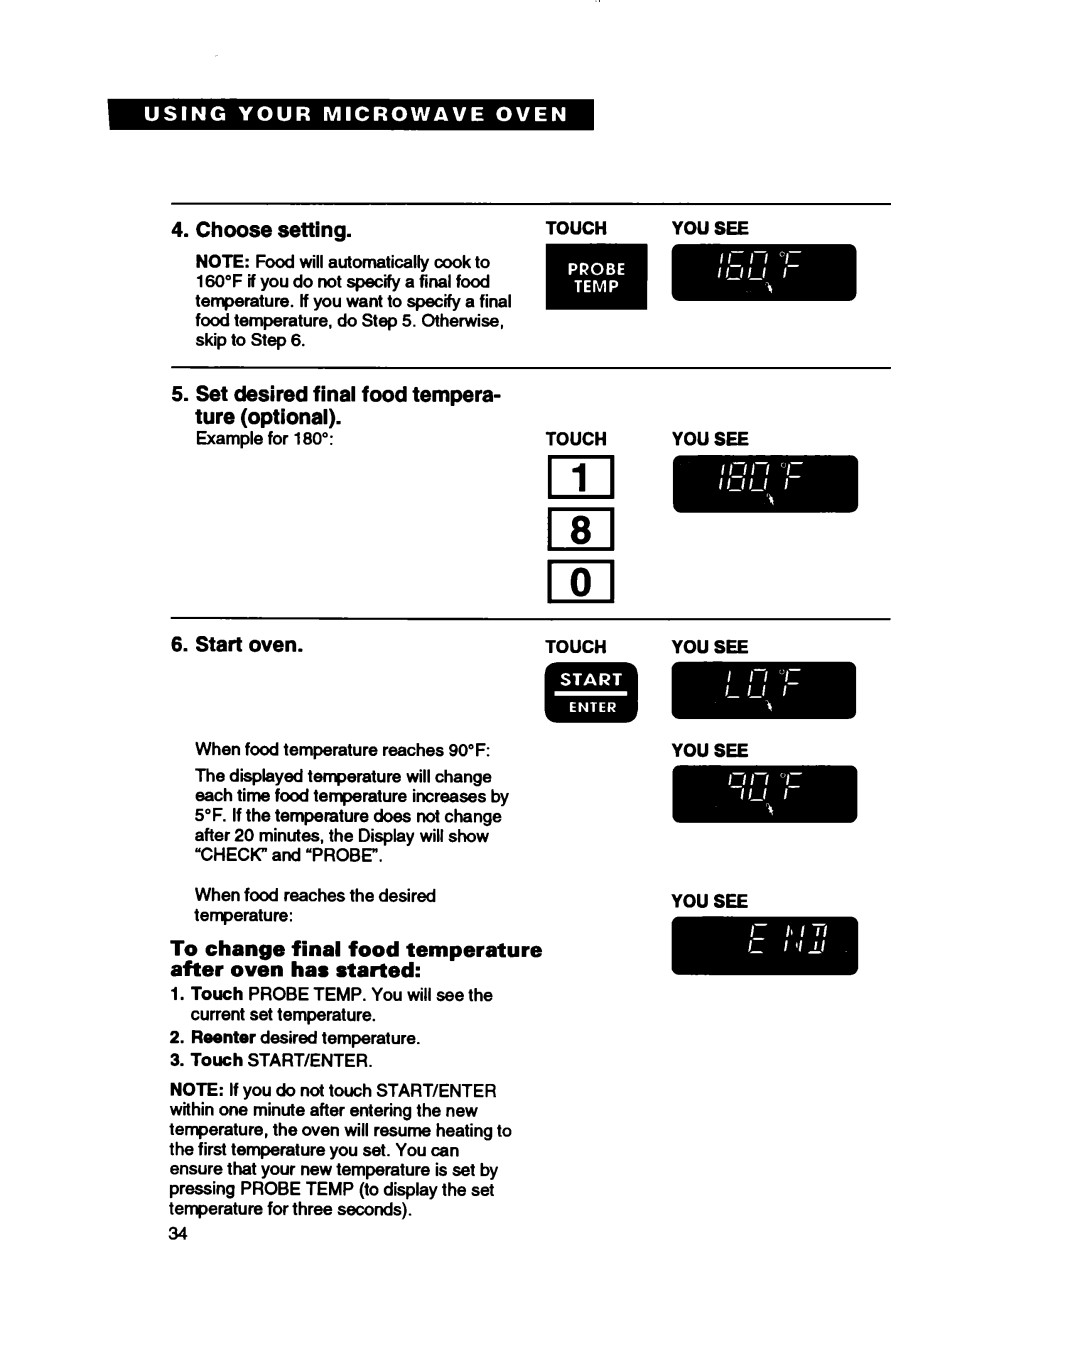 Whirlpool MH7110XB warranty Choose setting, Set desired final food tempera- ture optional, Start oven 